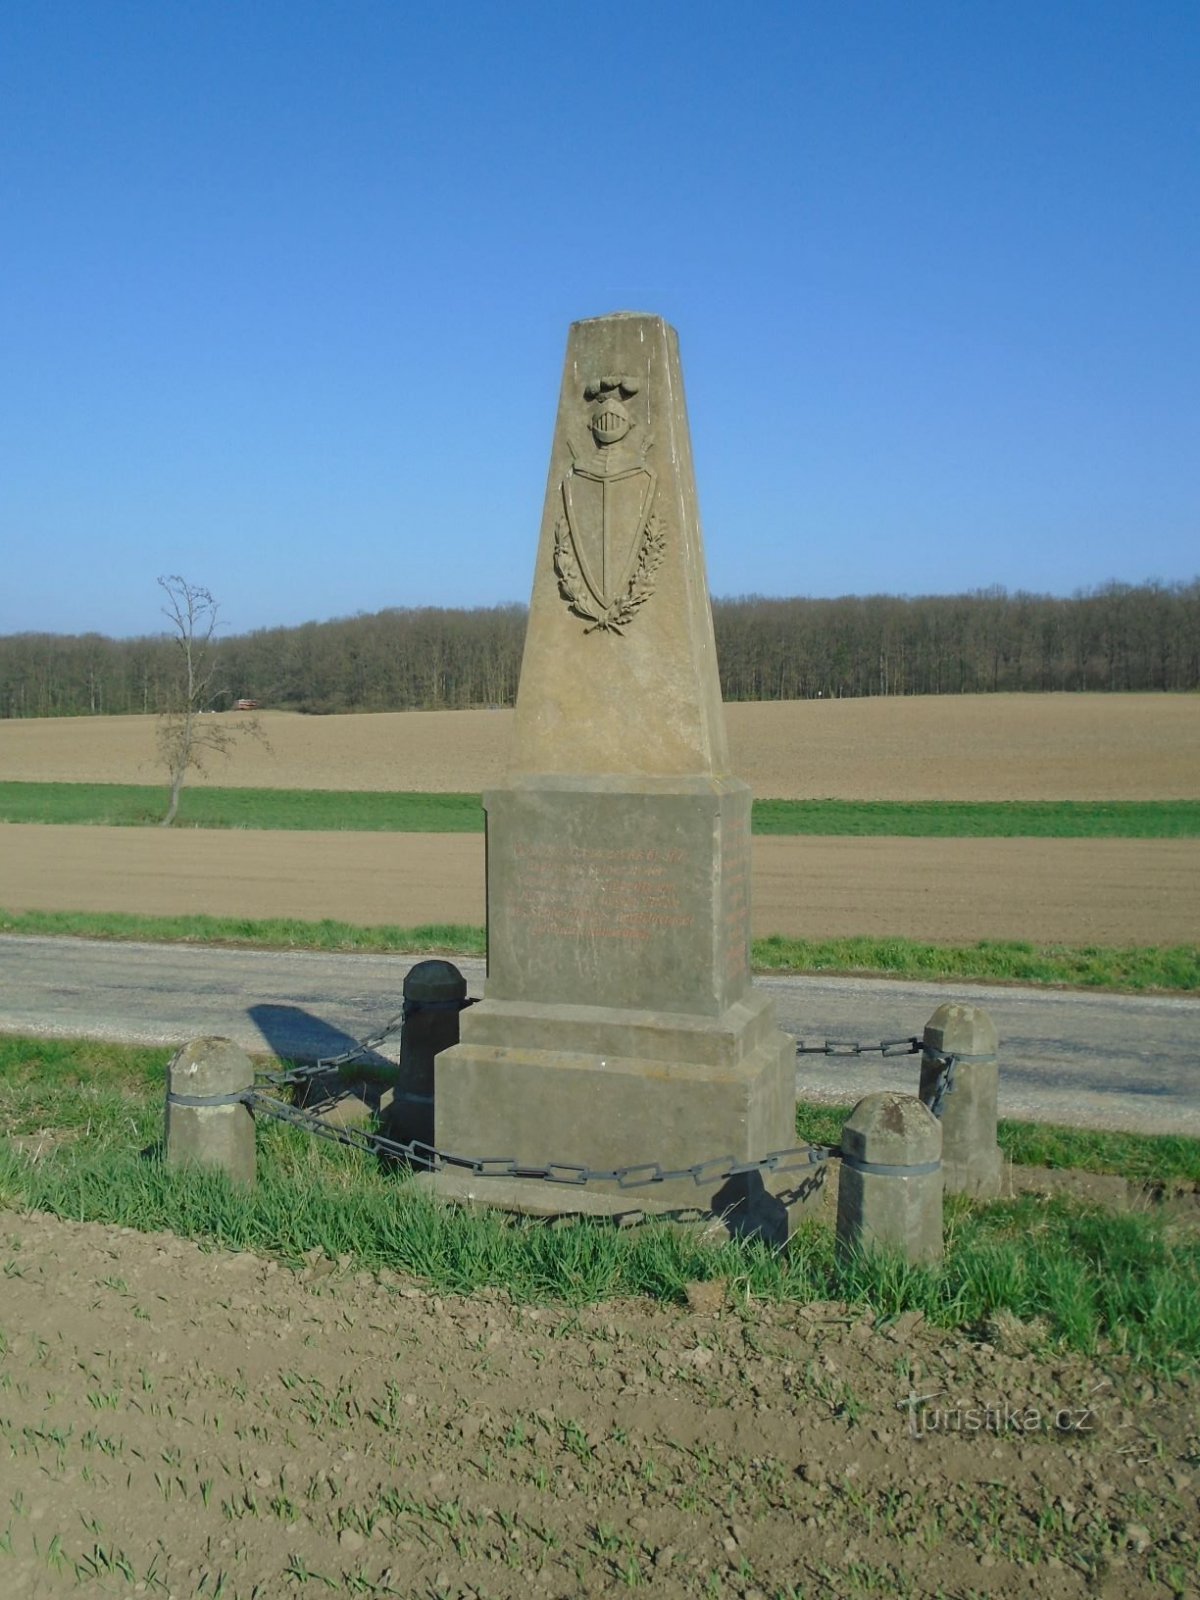 Monumento al 61° reggimento di fanteria austriaco sulla strada (Čistěves, 7.4.2019 aprile XNUMX)